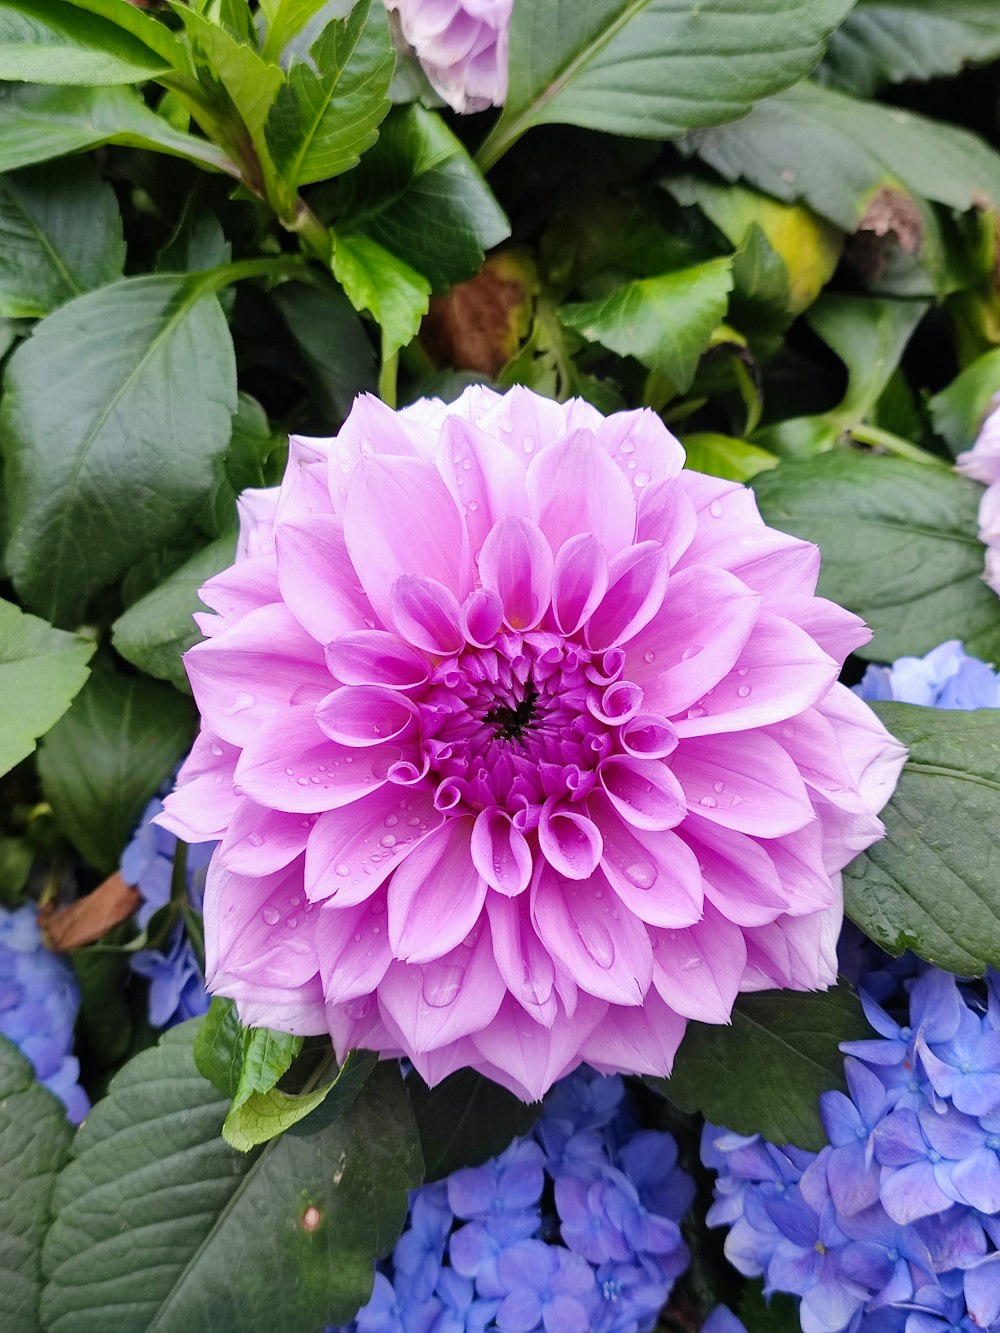 una flor púrpura rodeada de flores azules y moradas